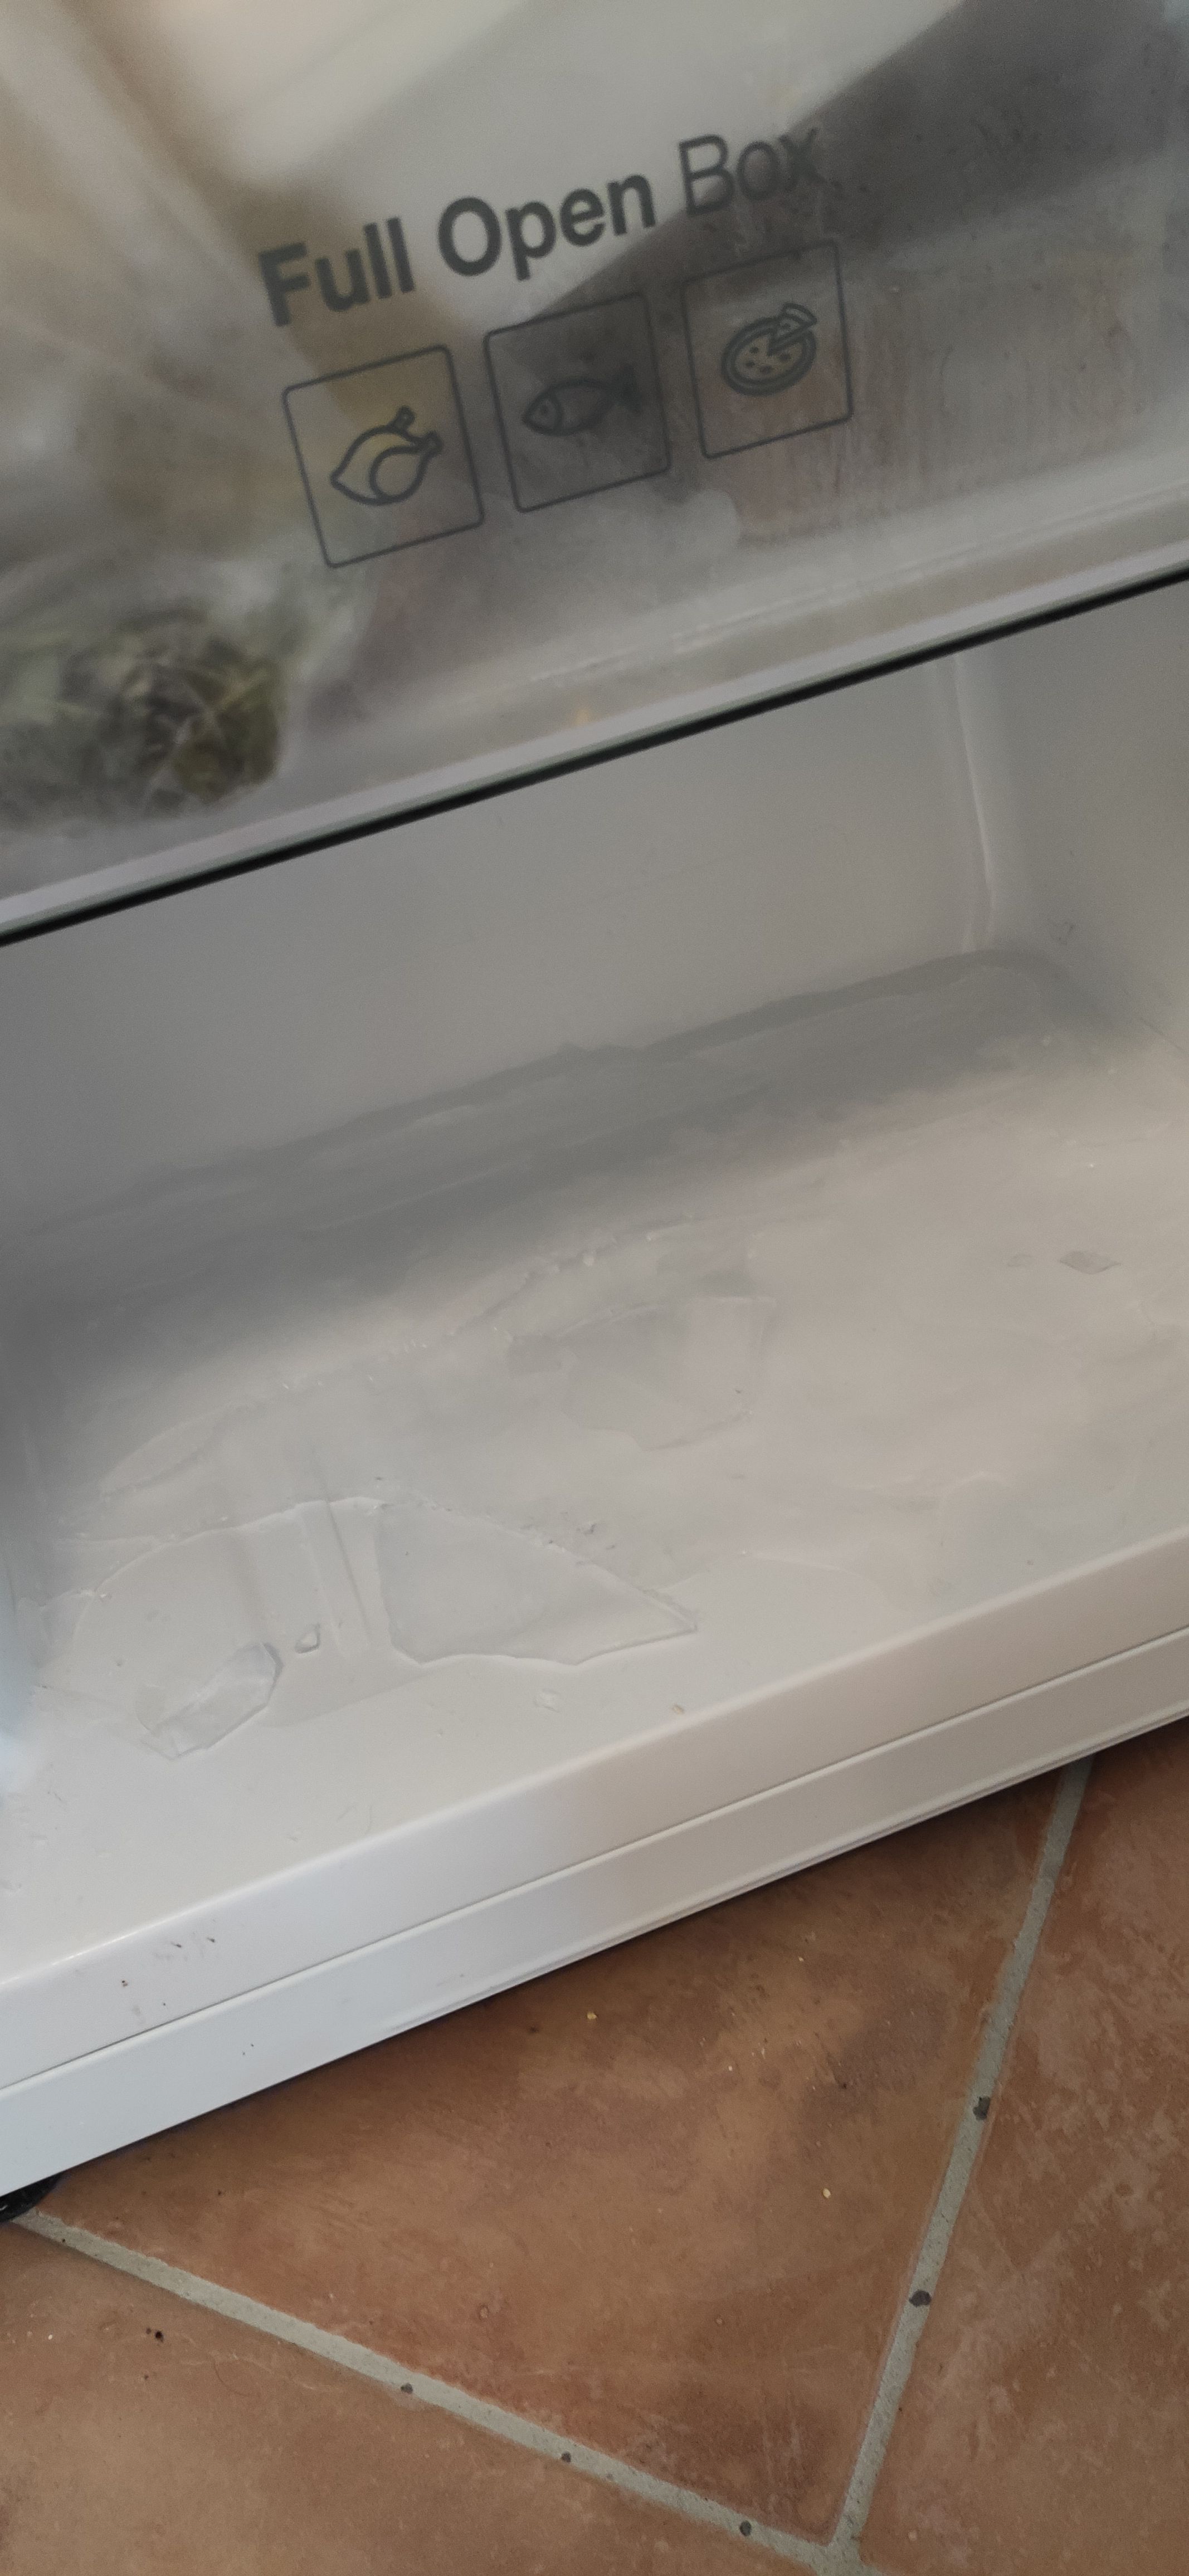 Frig no frost RL52VEBIH ghiaccio nel freezer - Pagina 11 - Samsung Community